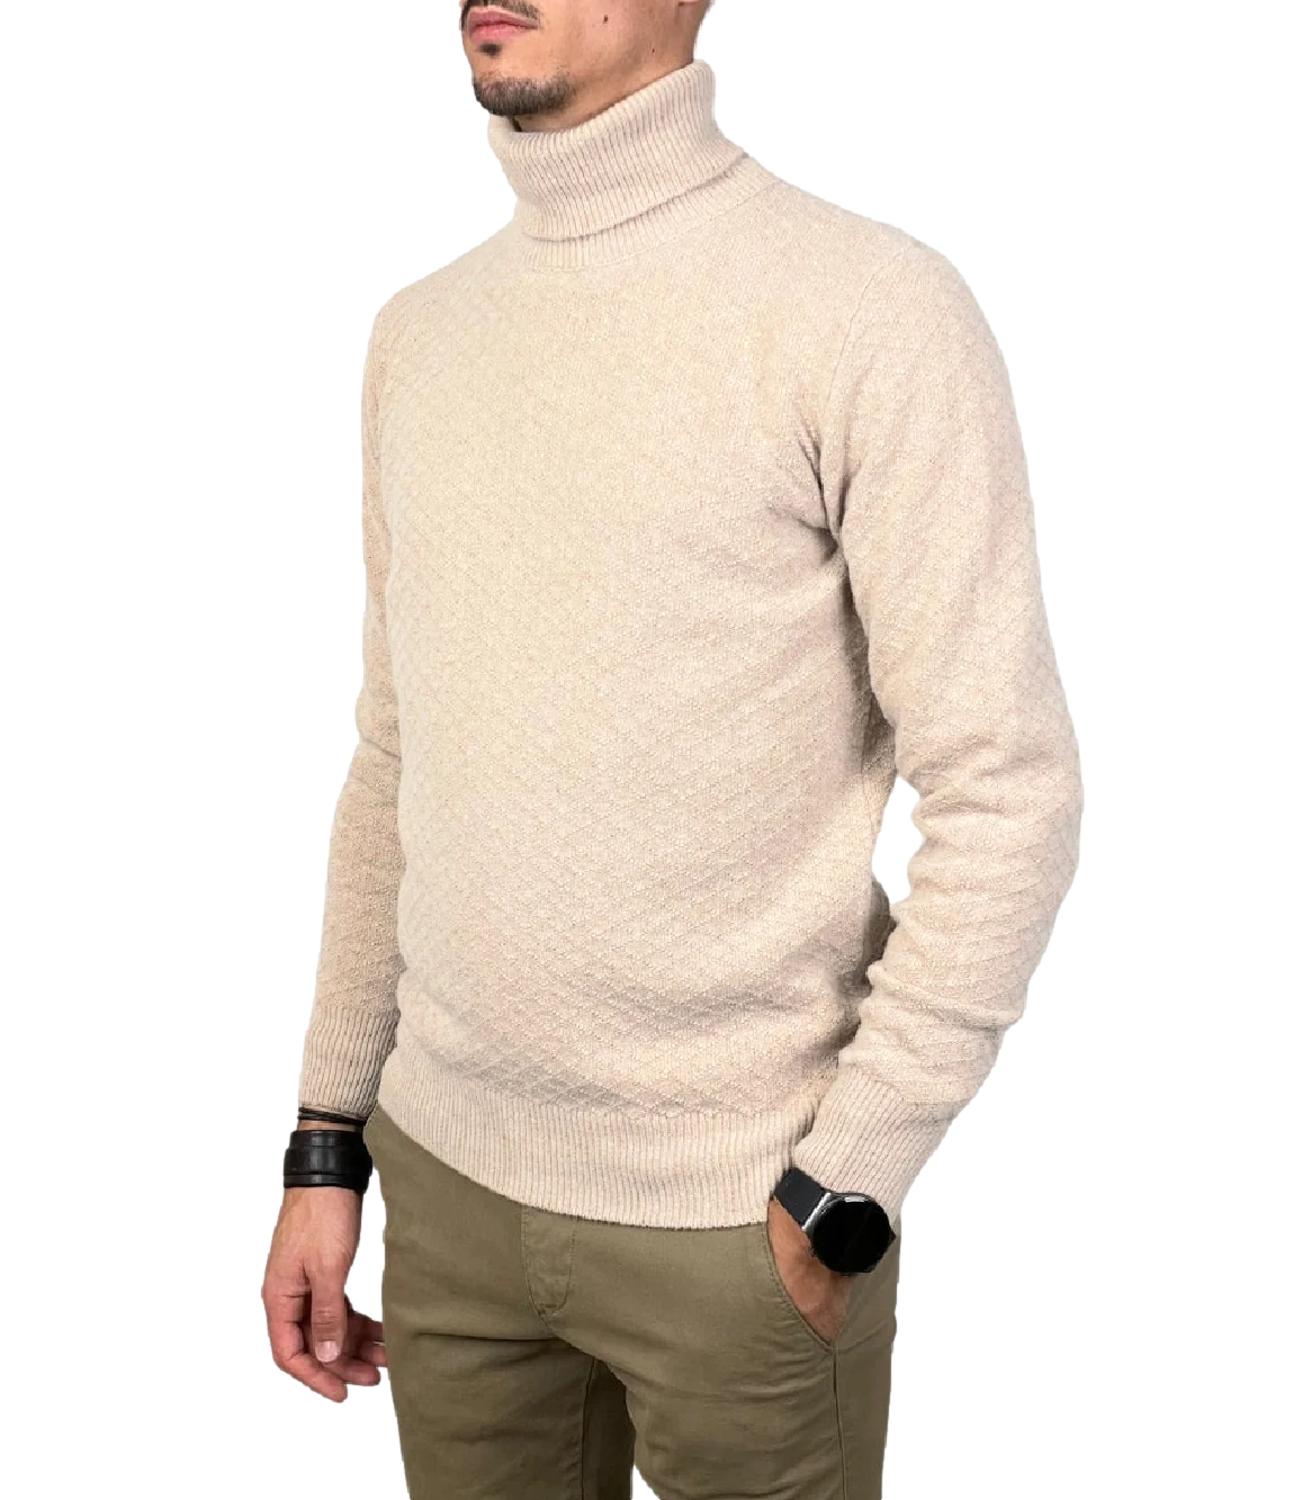 Creamy white Parker high neck sweater